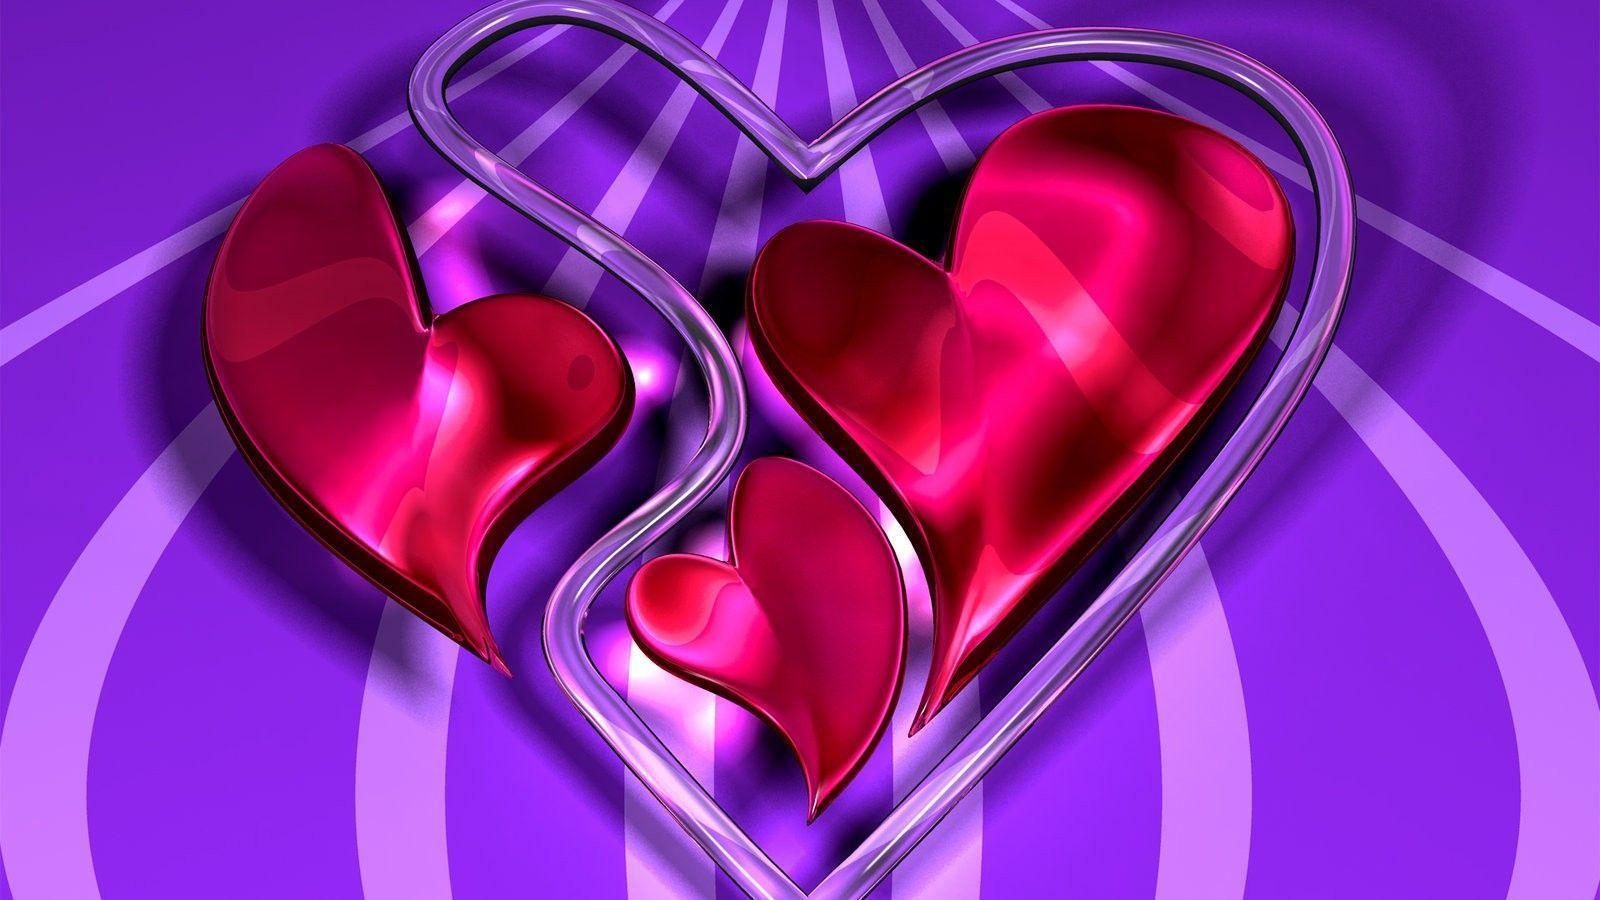 Love Background Image Free Download. Free Desk Wallpaper